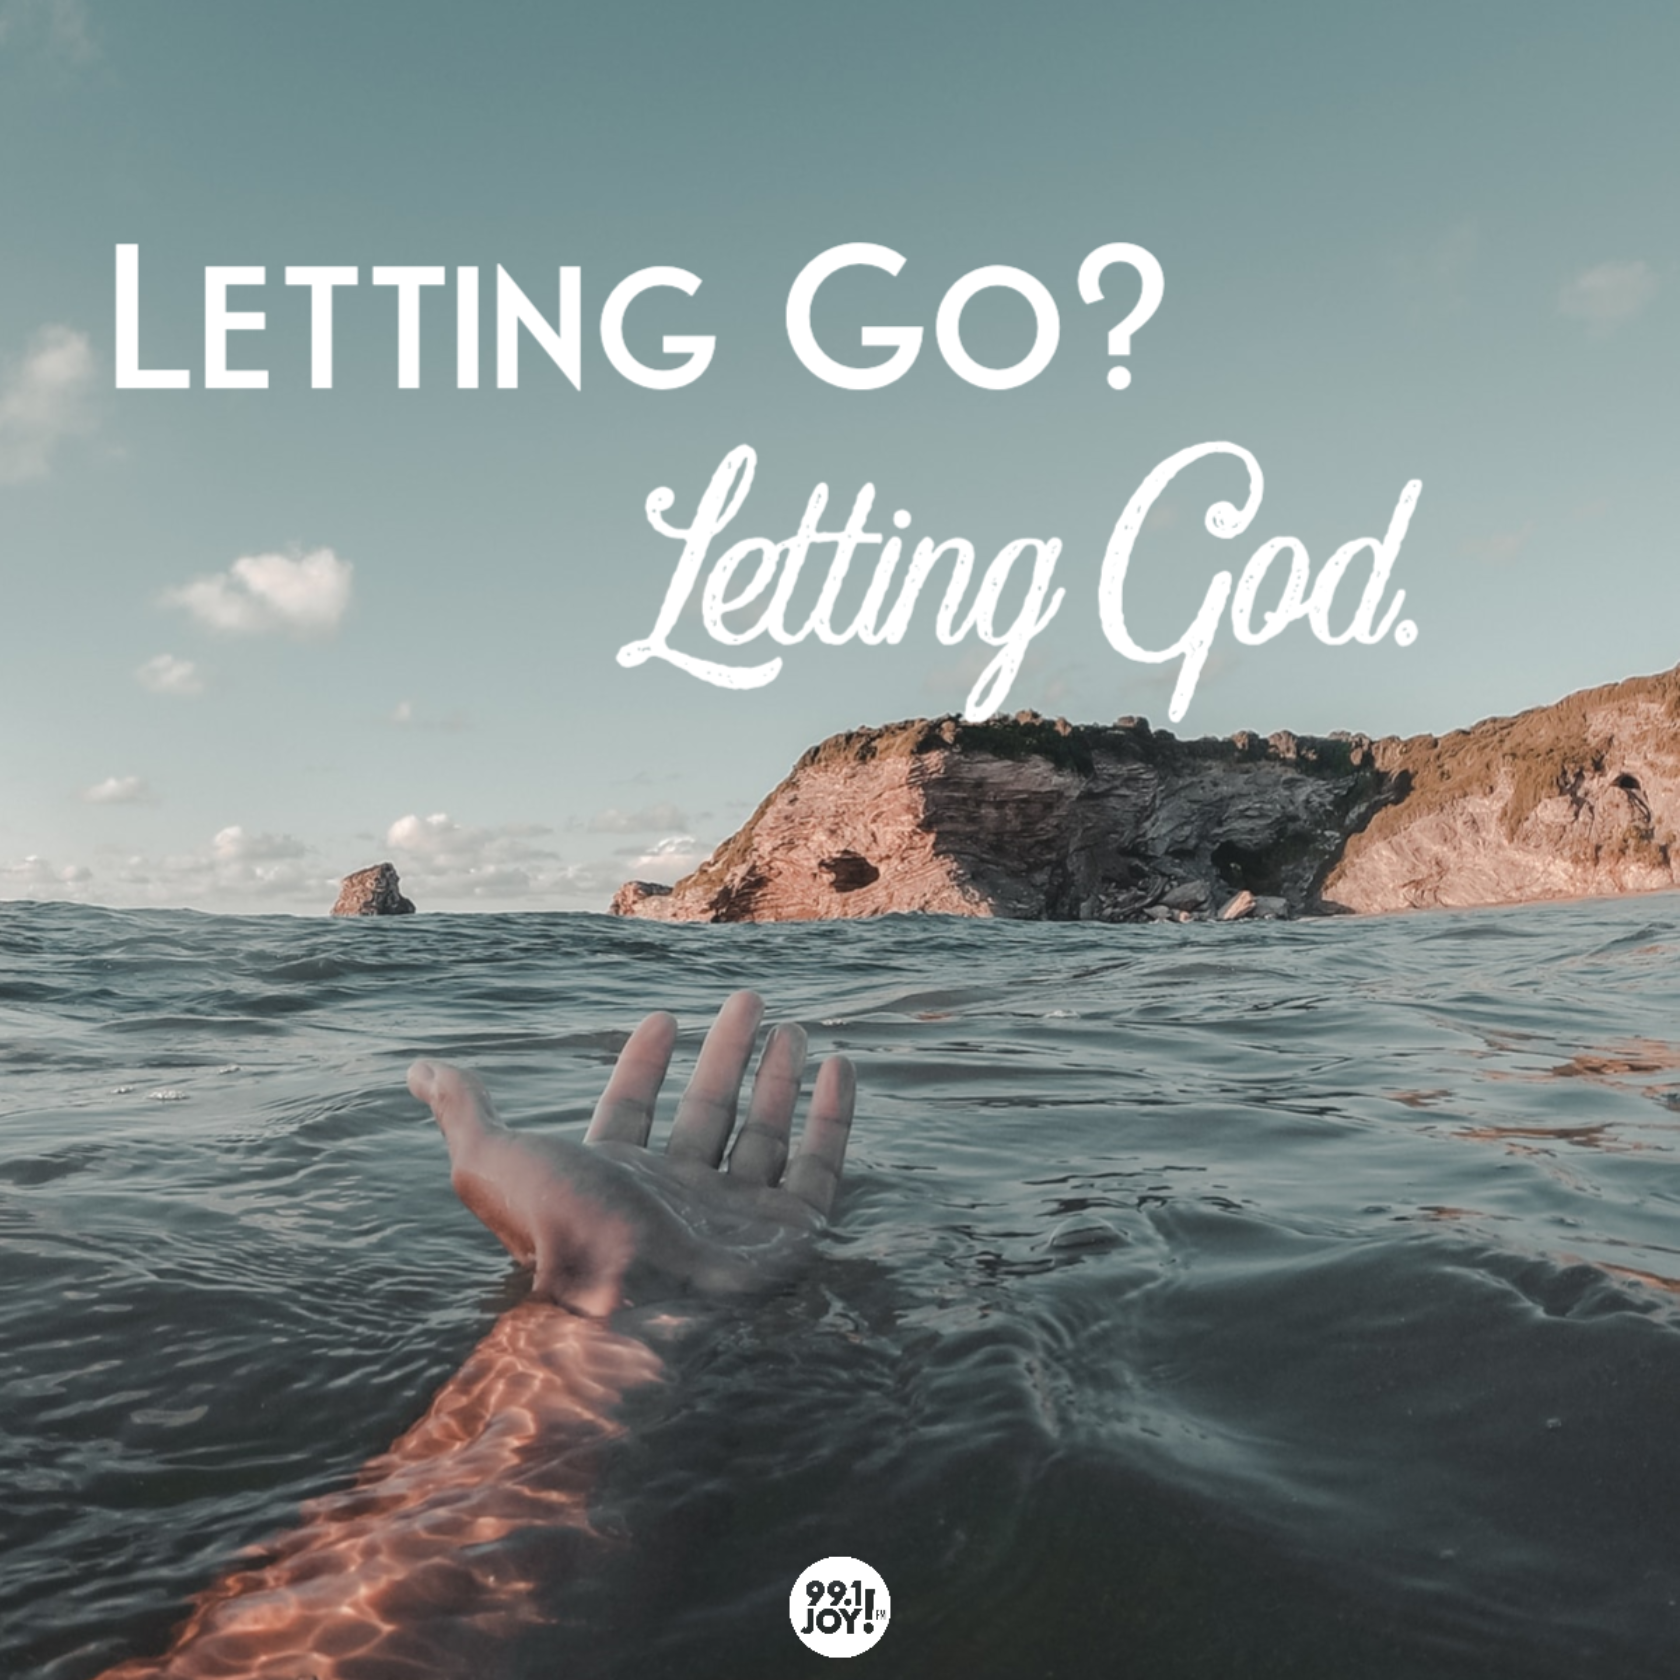 Letting Go? Letting God.